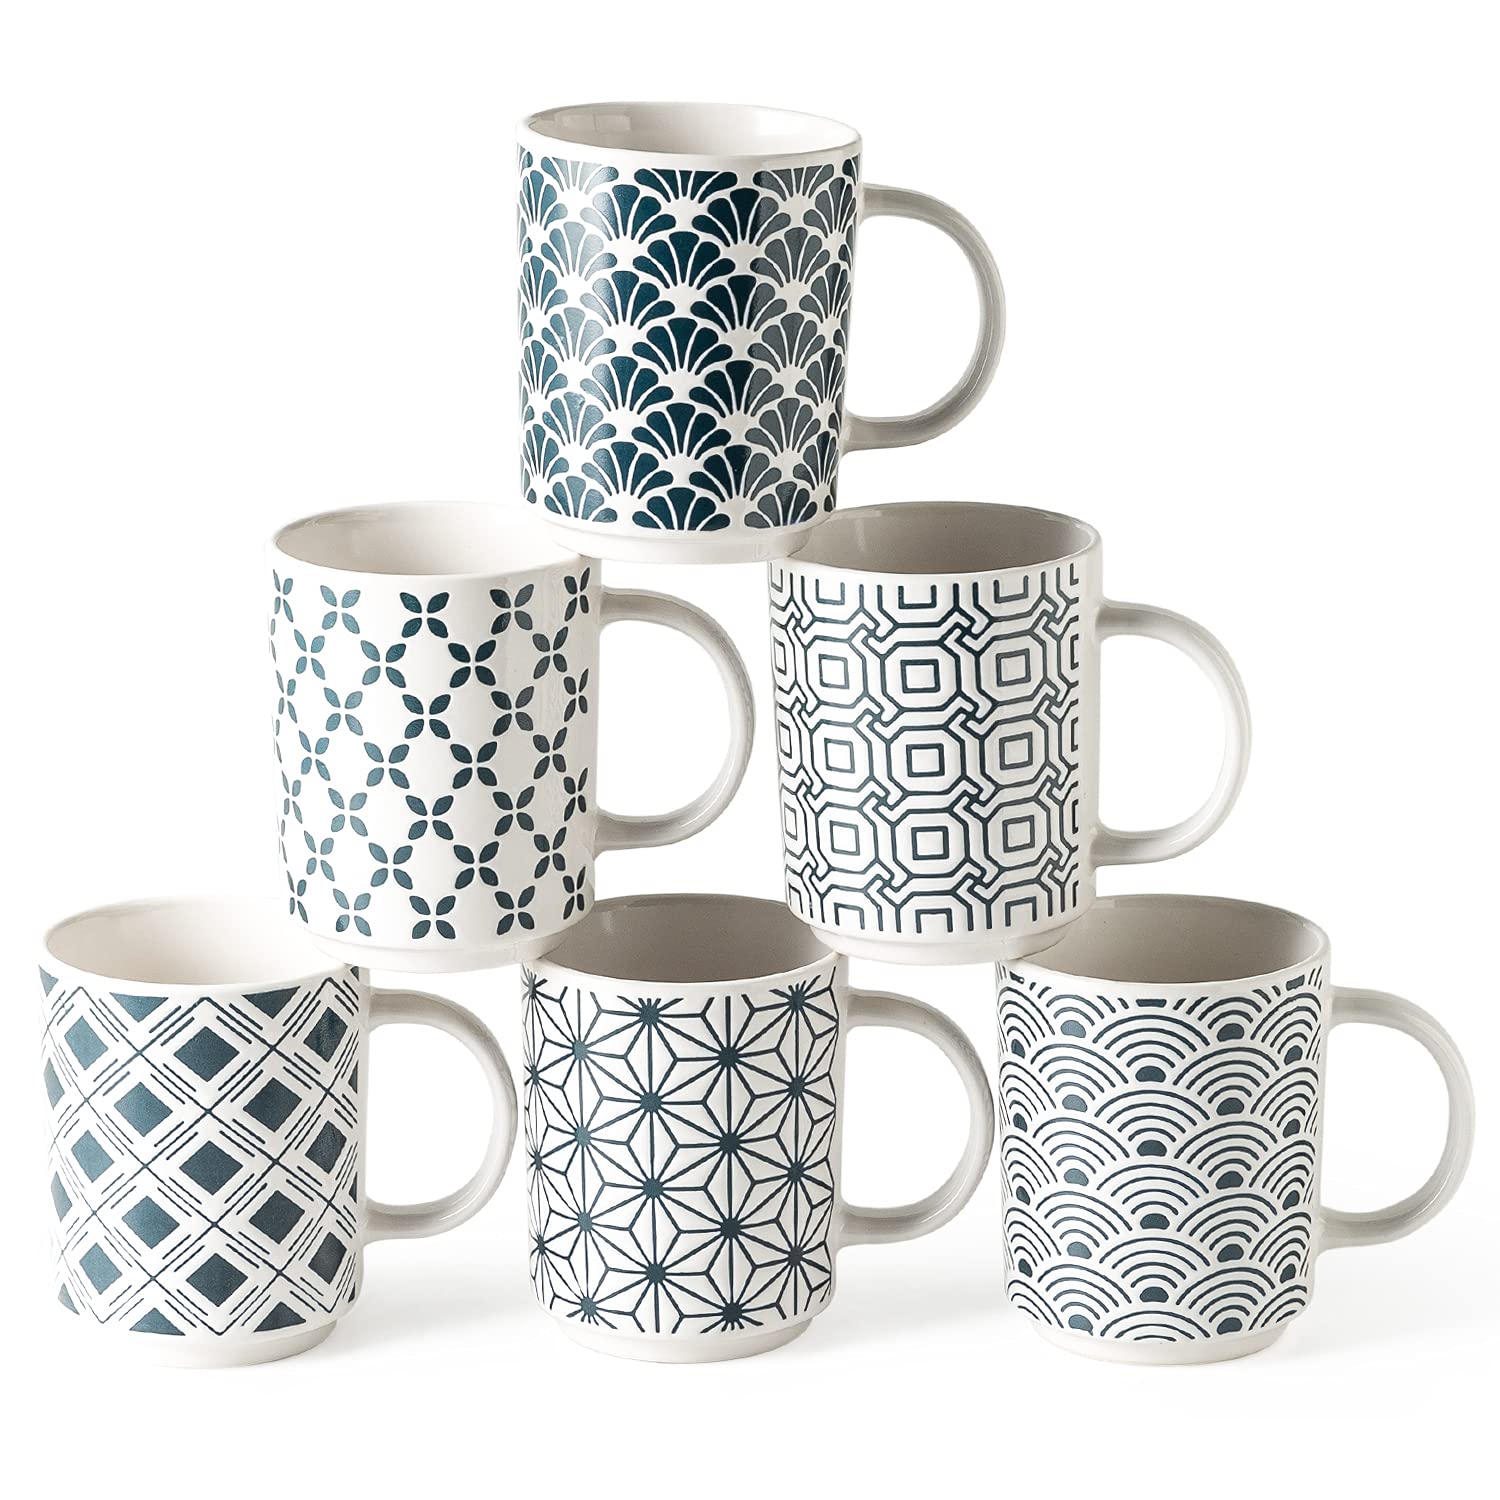 AmorArc Set of 6 Porcelain Coffee Mugs